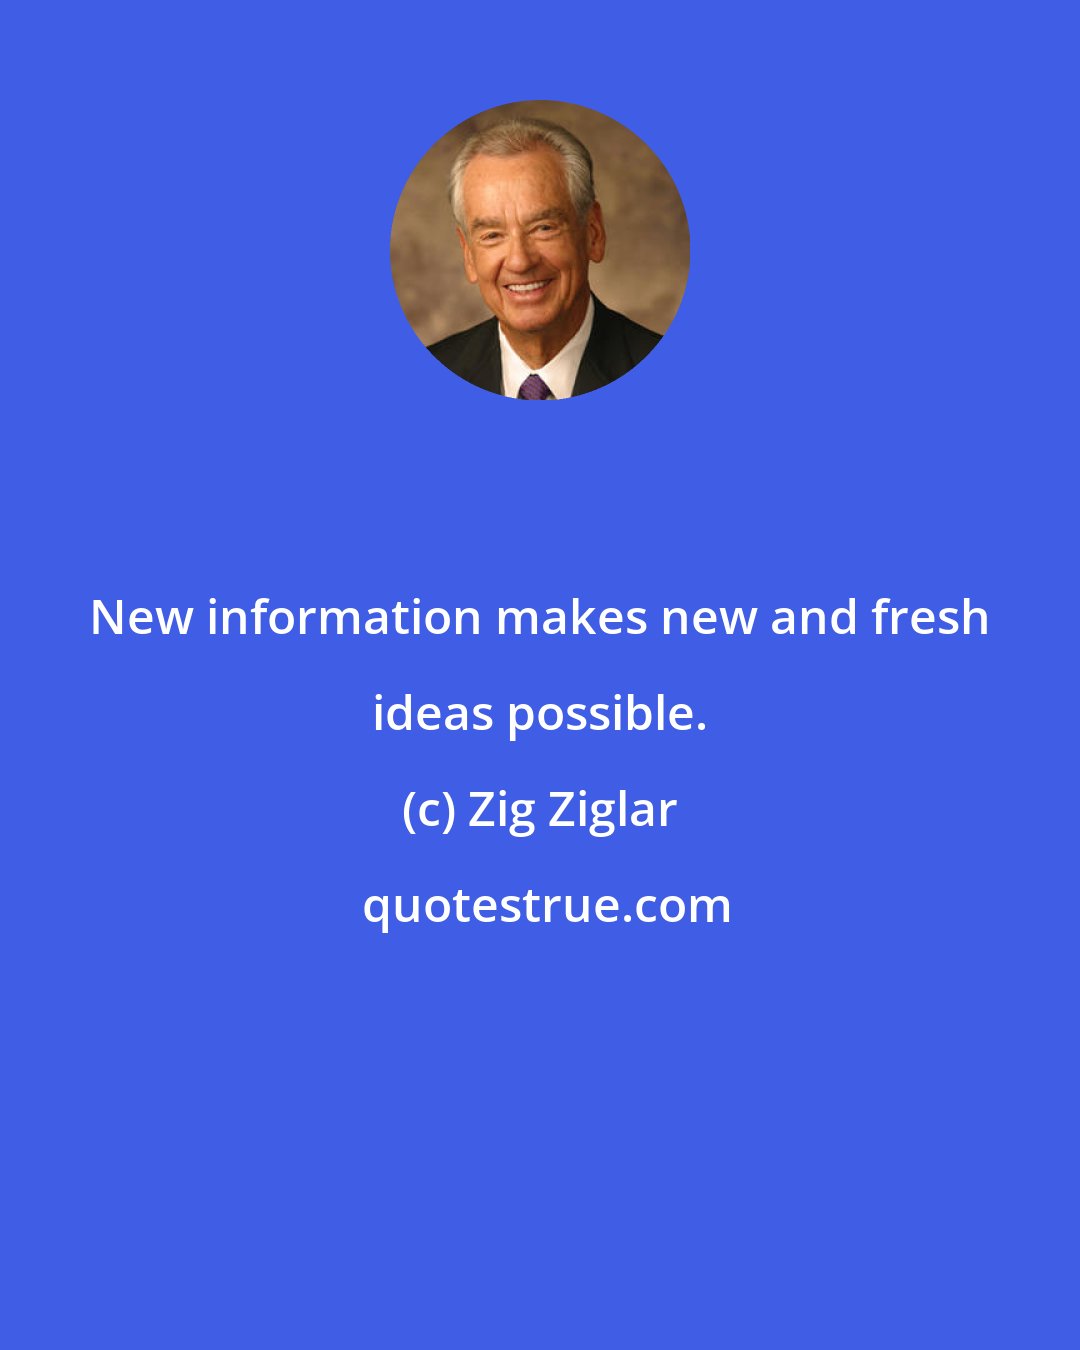 Zig Ziglar: New information makes new and fresh ideas possible.